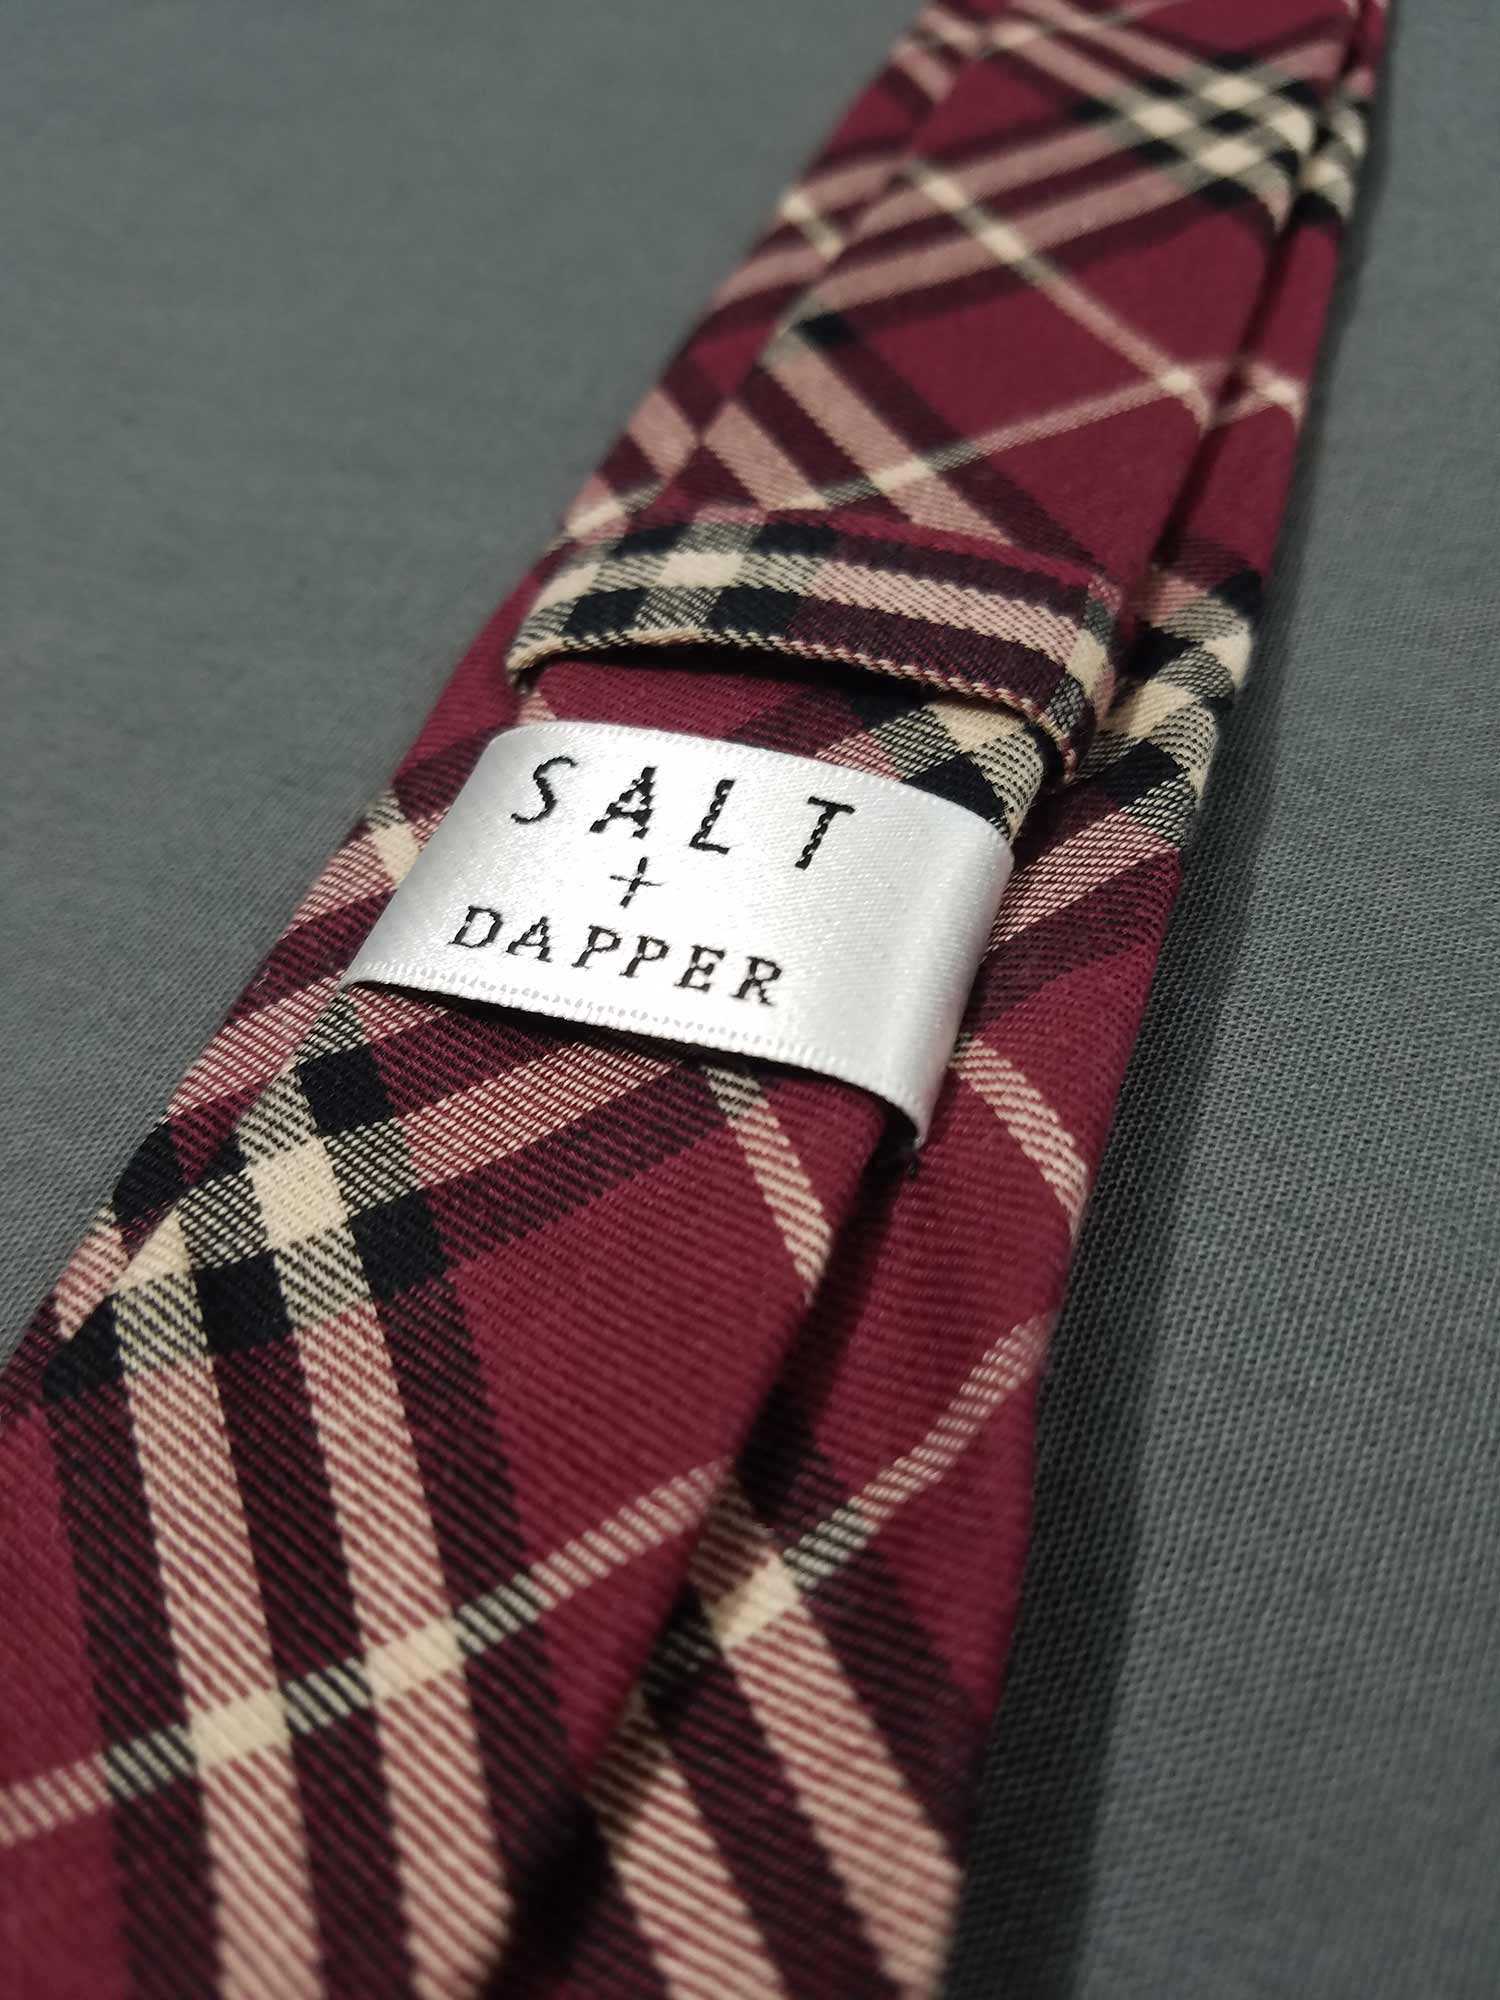 Salt + Dapper Tie